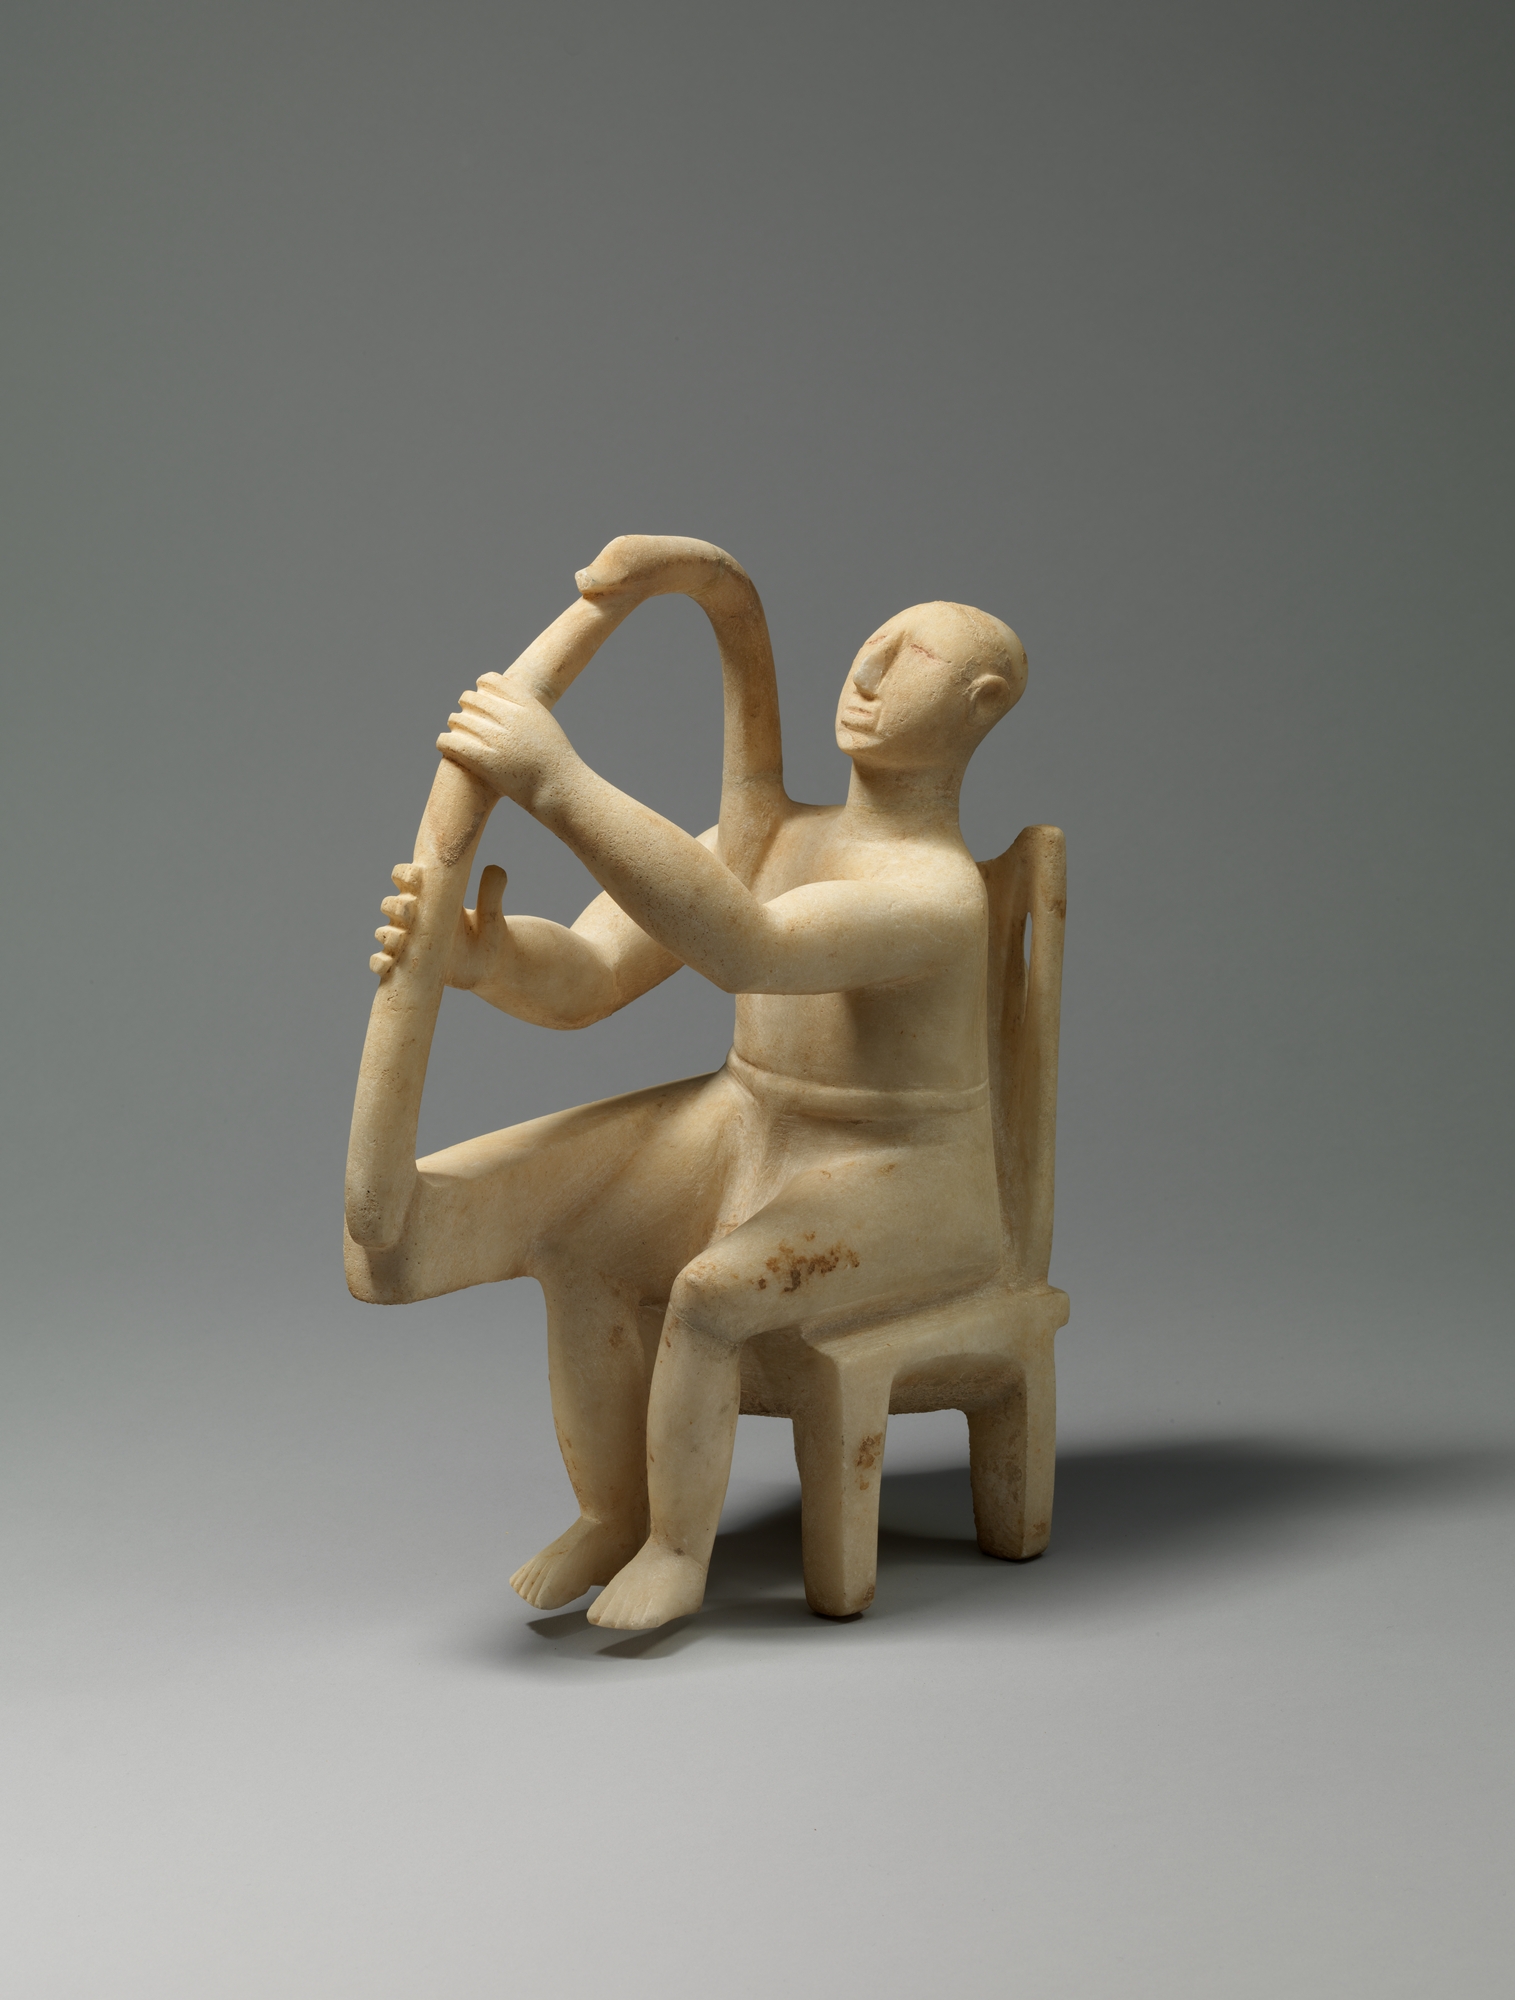 Cycladic Harp Player by Unknown Artist - 2800–2700 B.C. - 29.21 cm Metropolitan Museum of Art